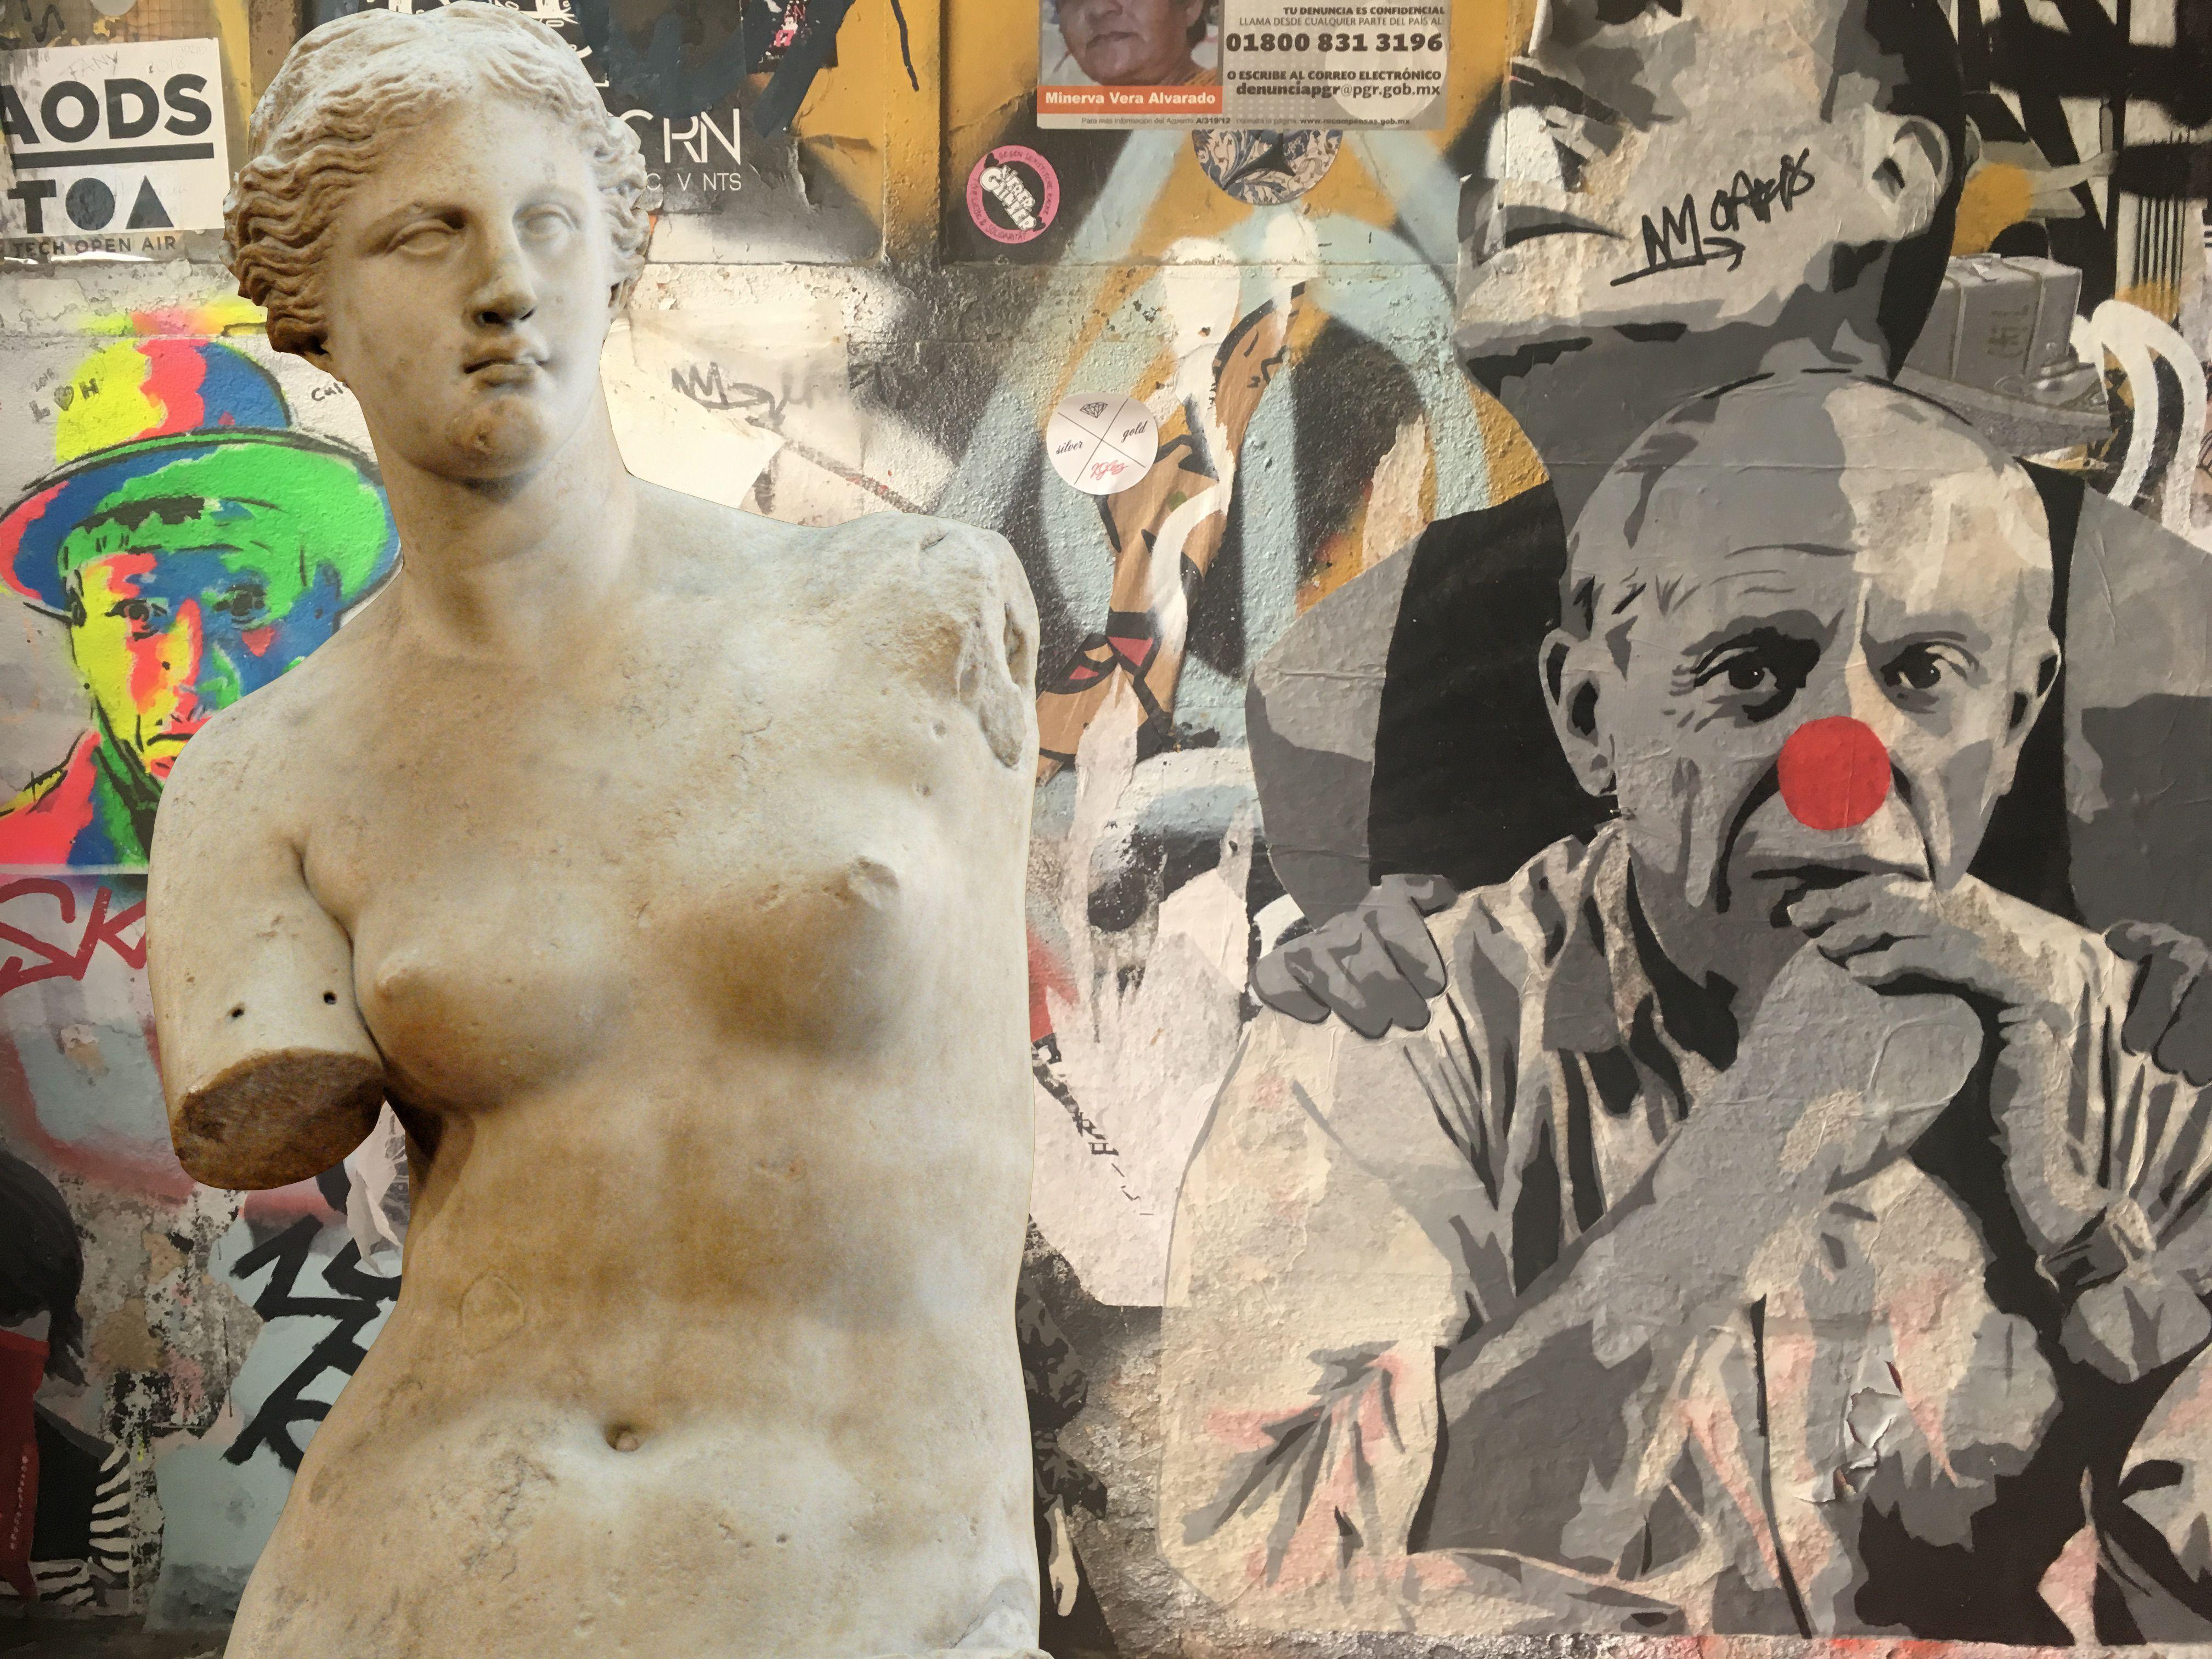 Venus and Picasso, Digital on Metal - Print by Eva Hoffmann